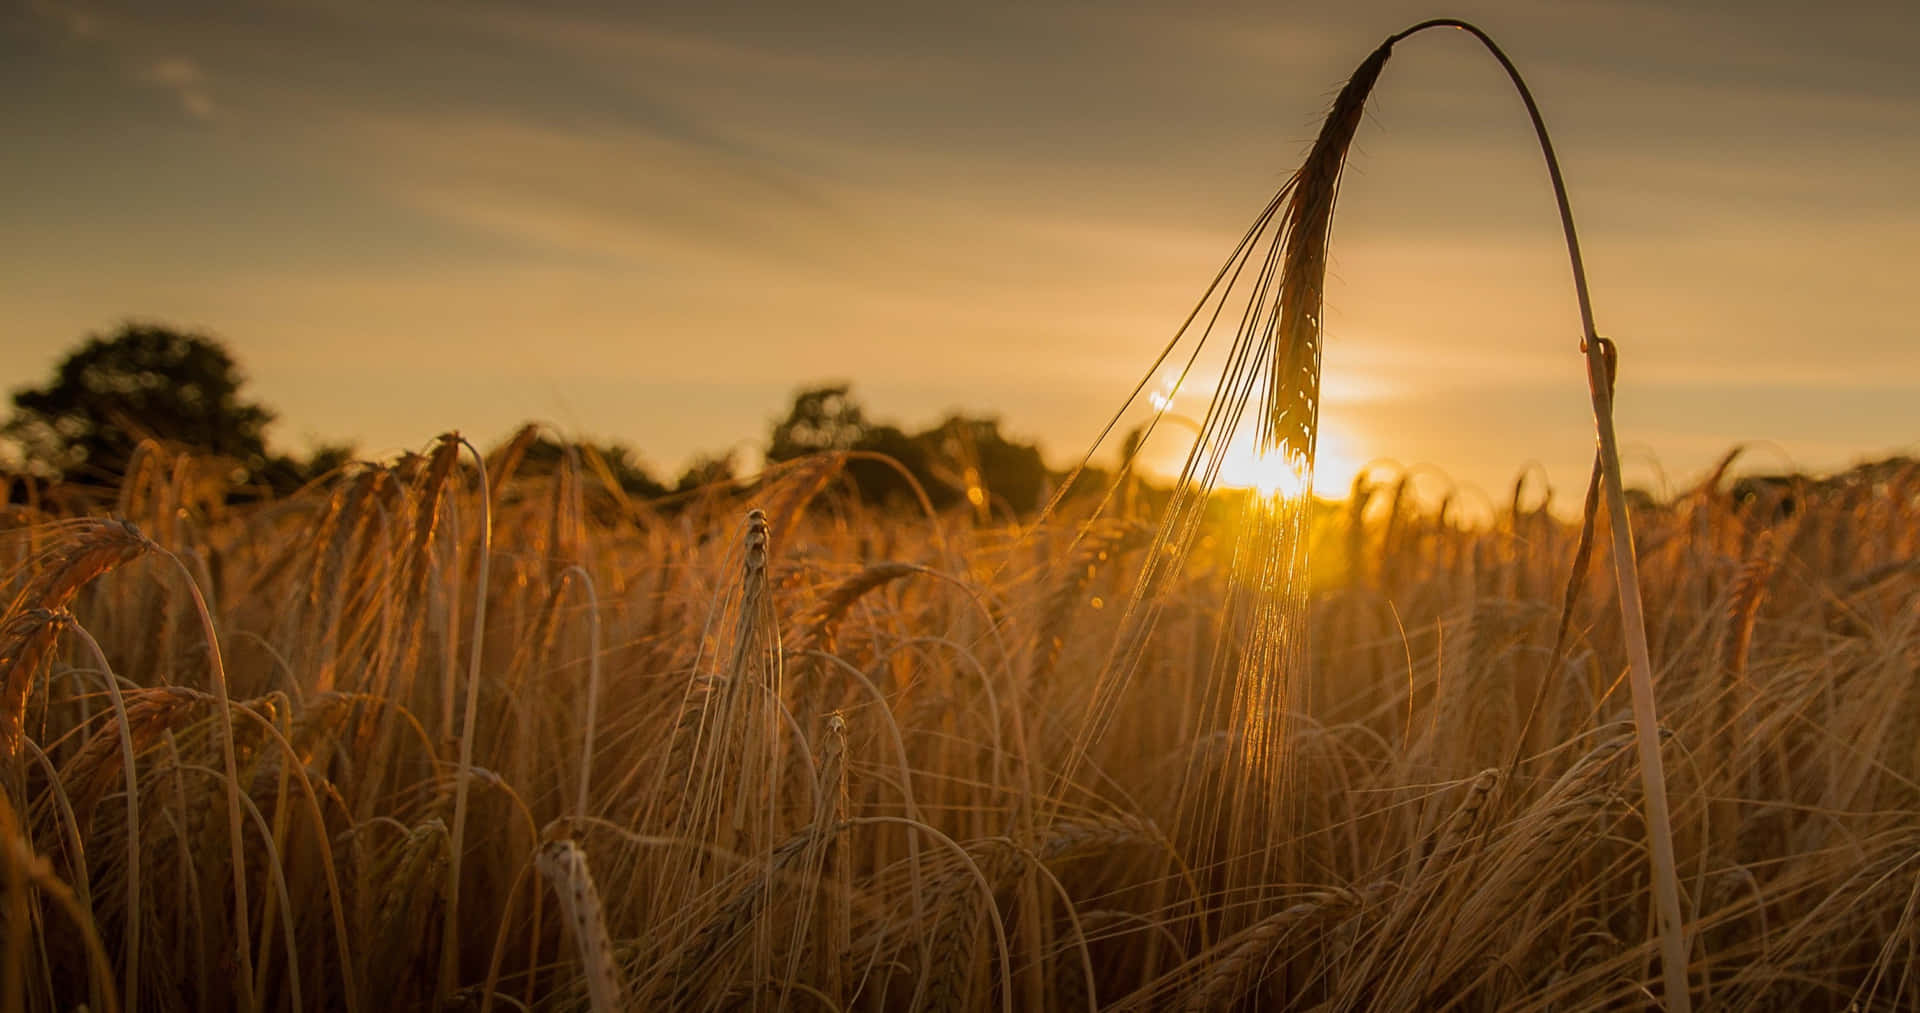 A close-up of fresh, golden wheat